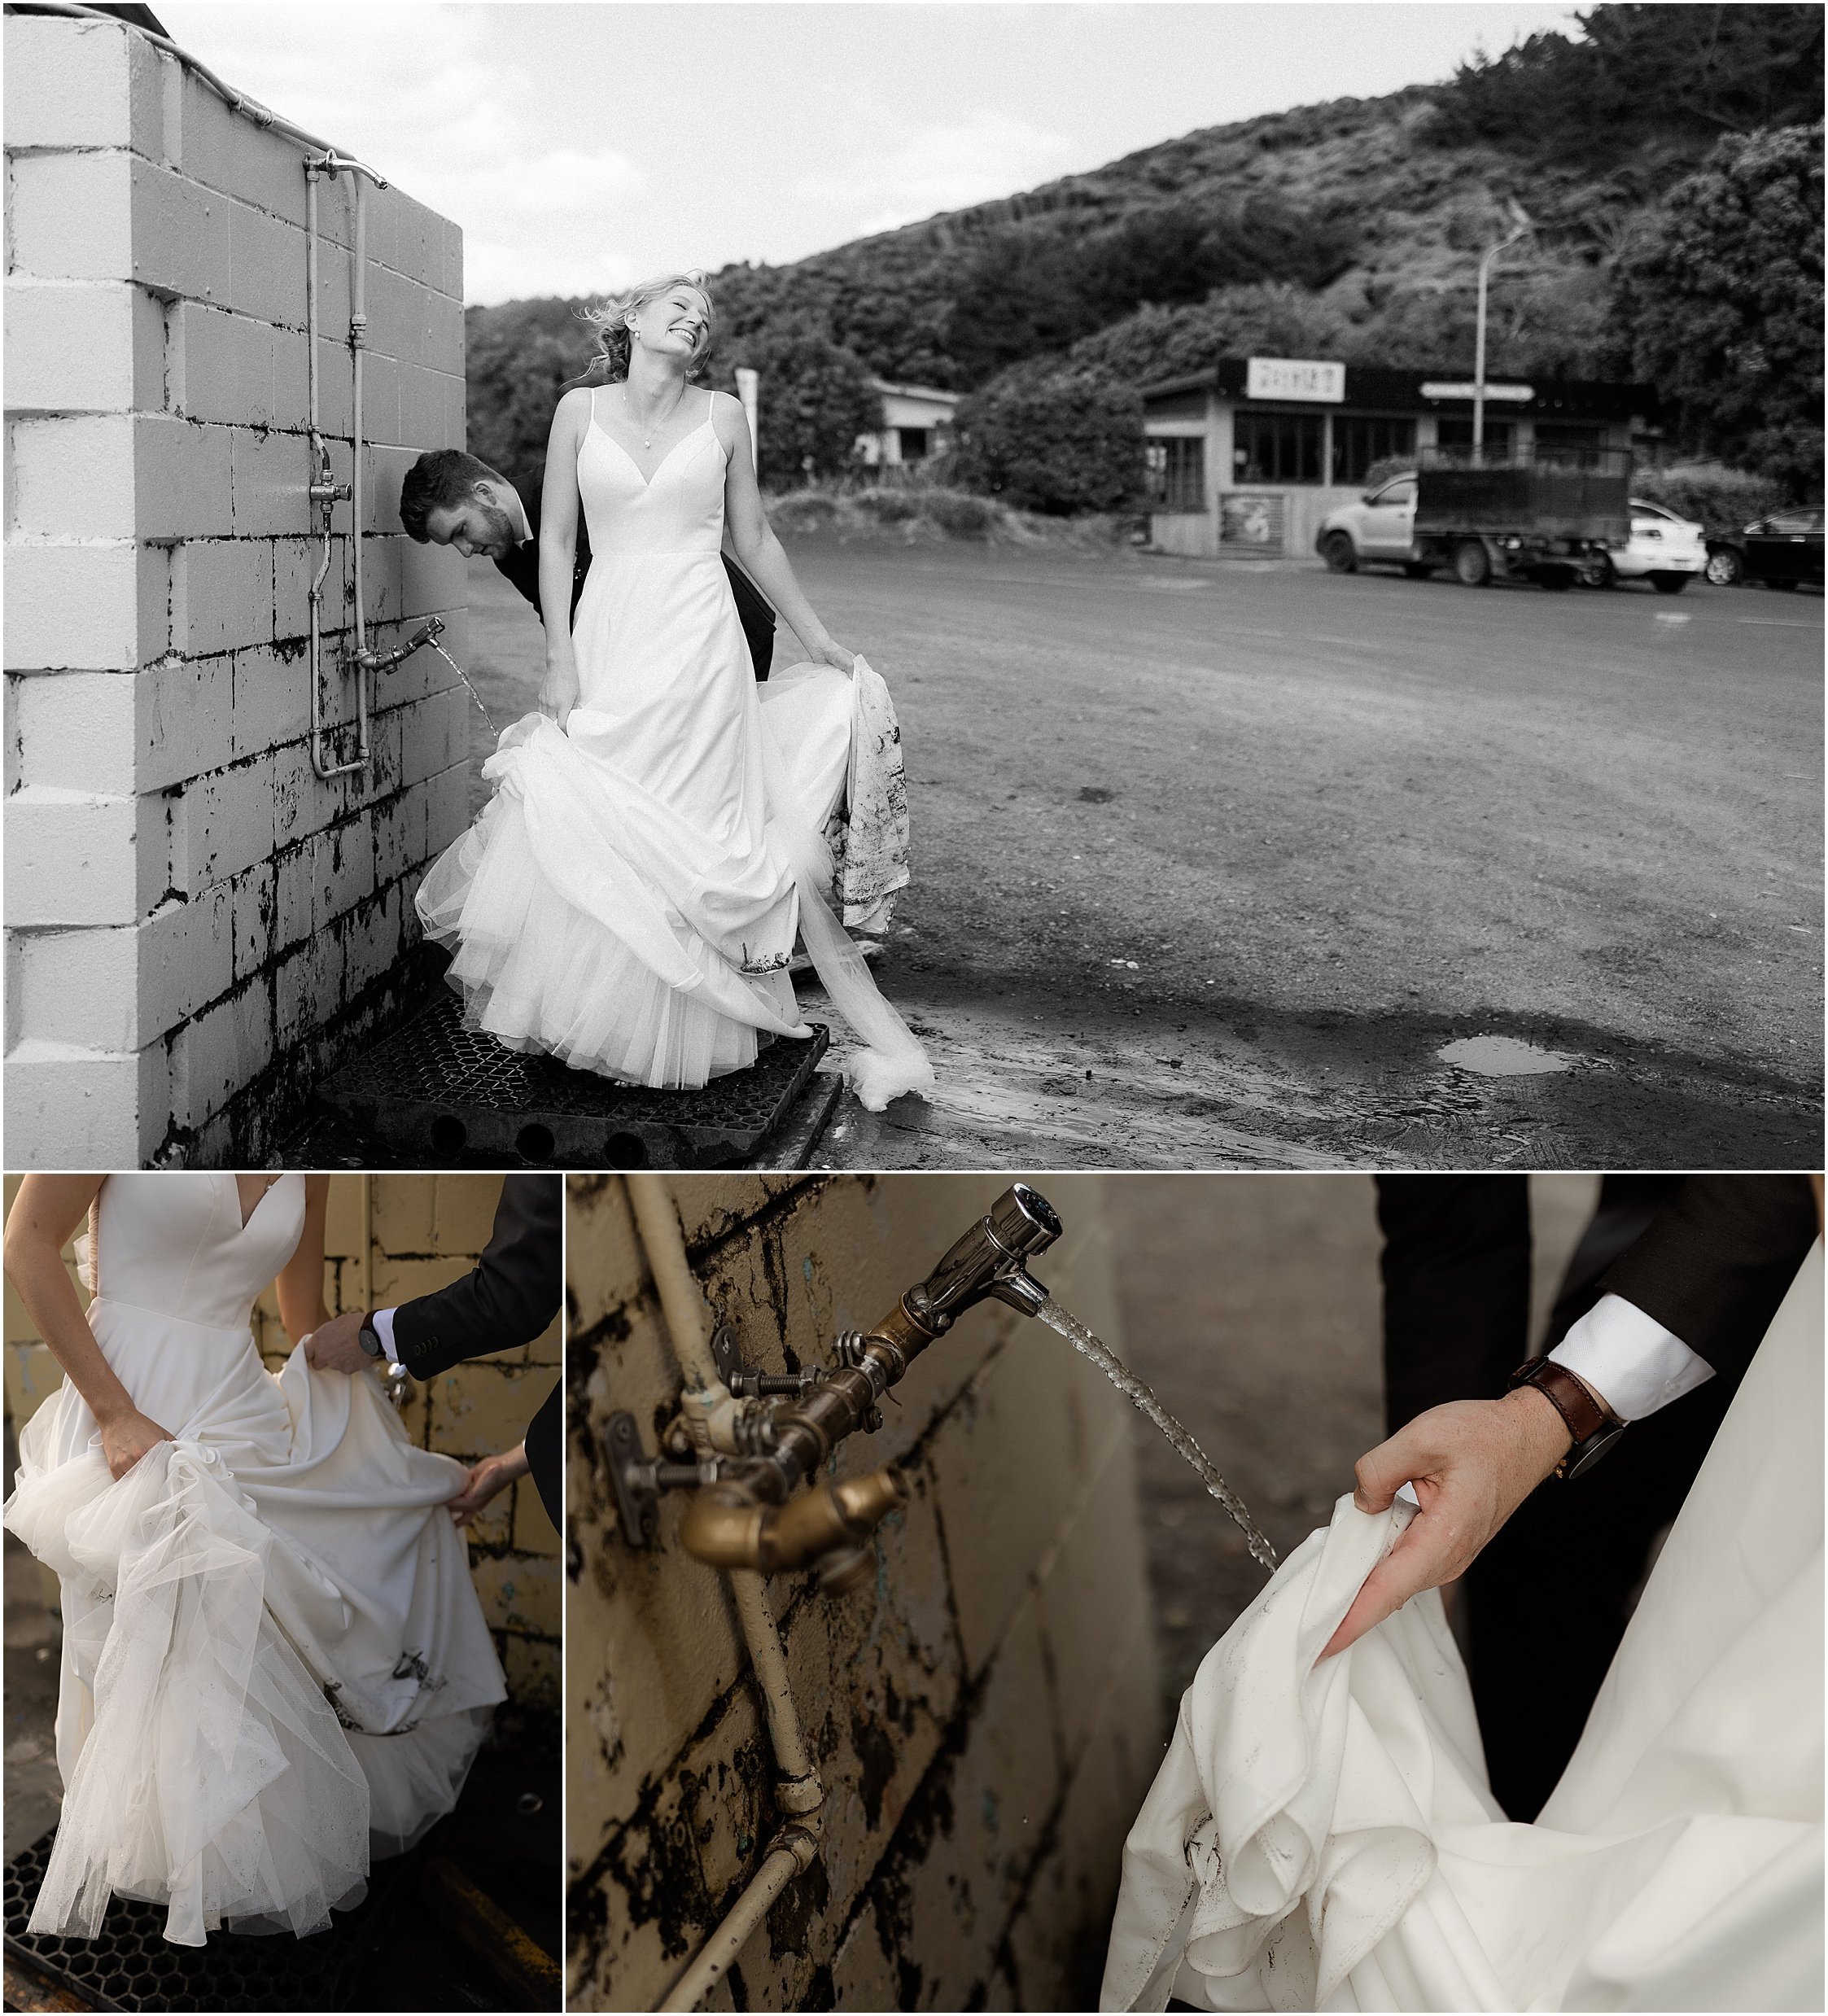 Zanda+Auckland+wedding+photographer+New+Zealand_0336.jpeg